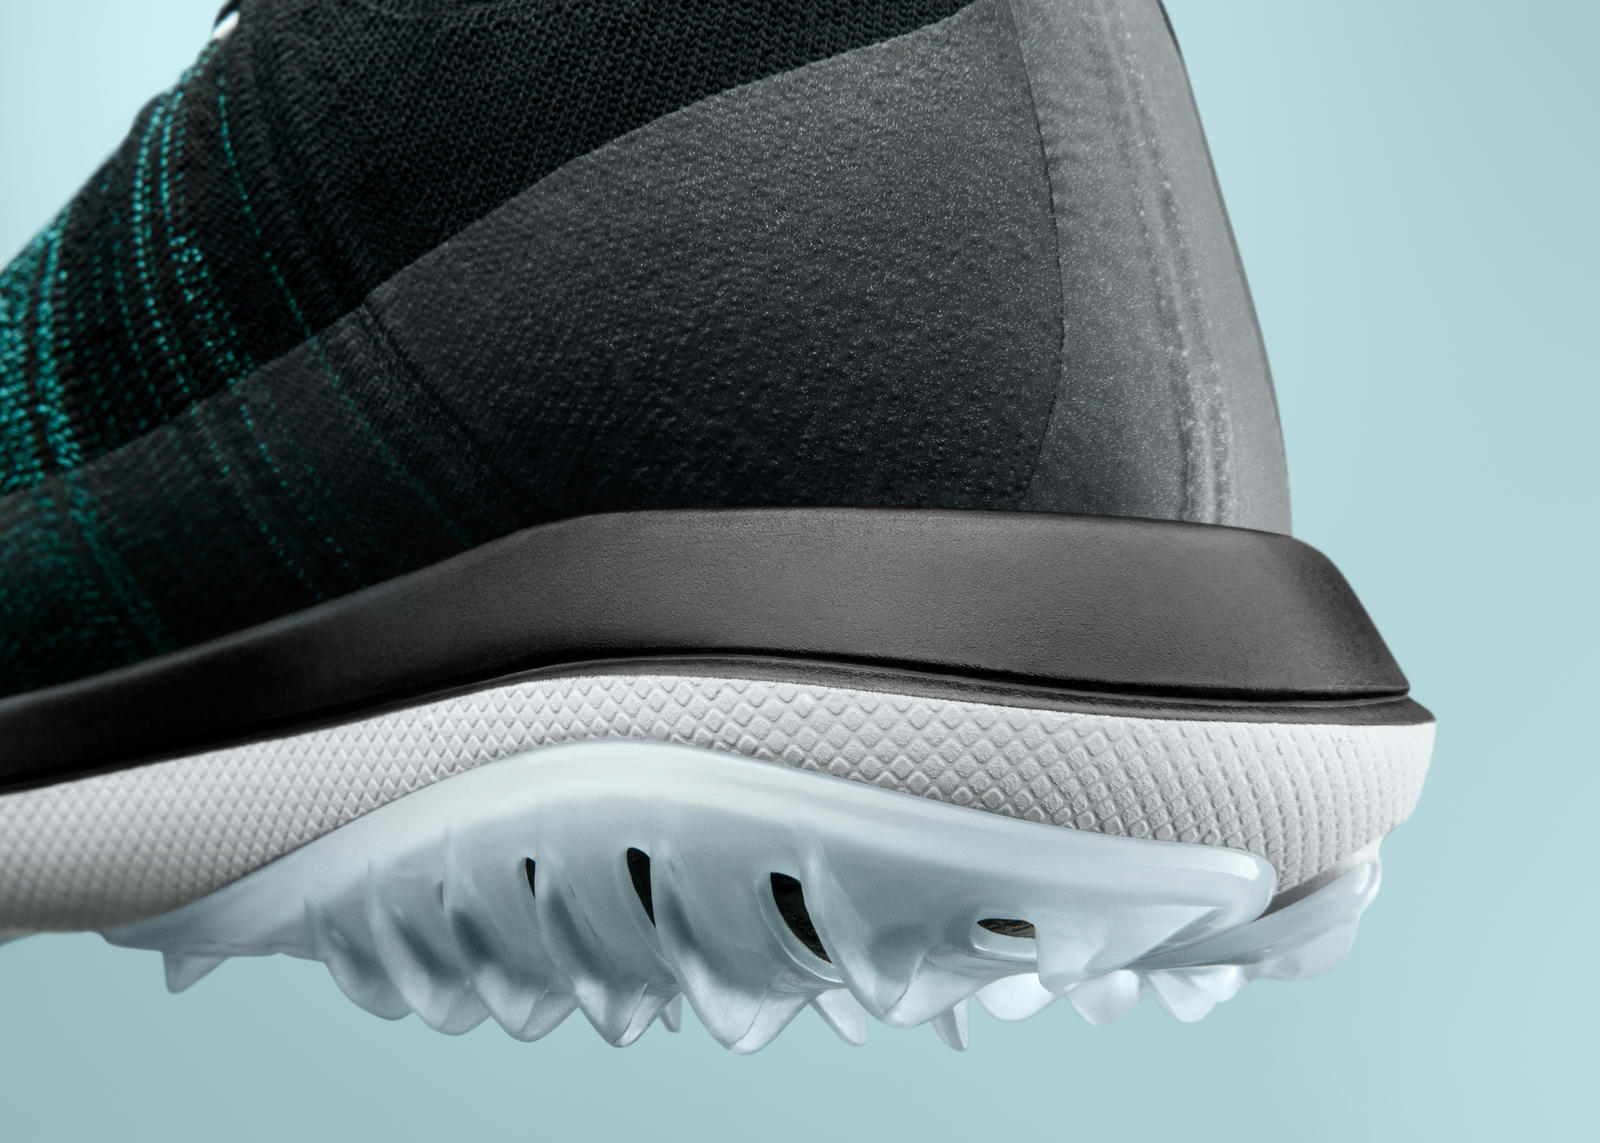 Nike unveils Flyknit Elite golf shoe